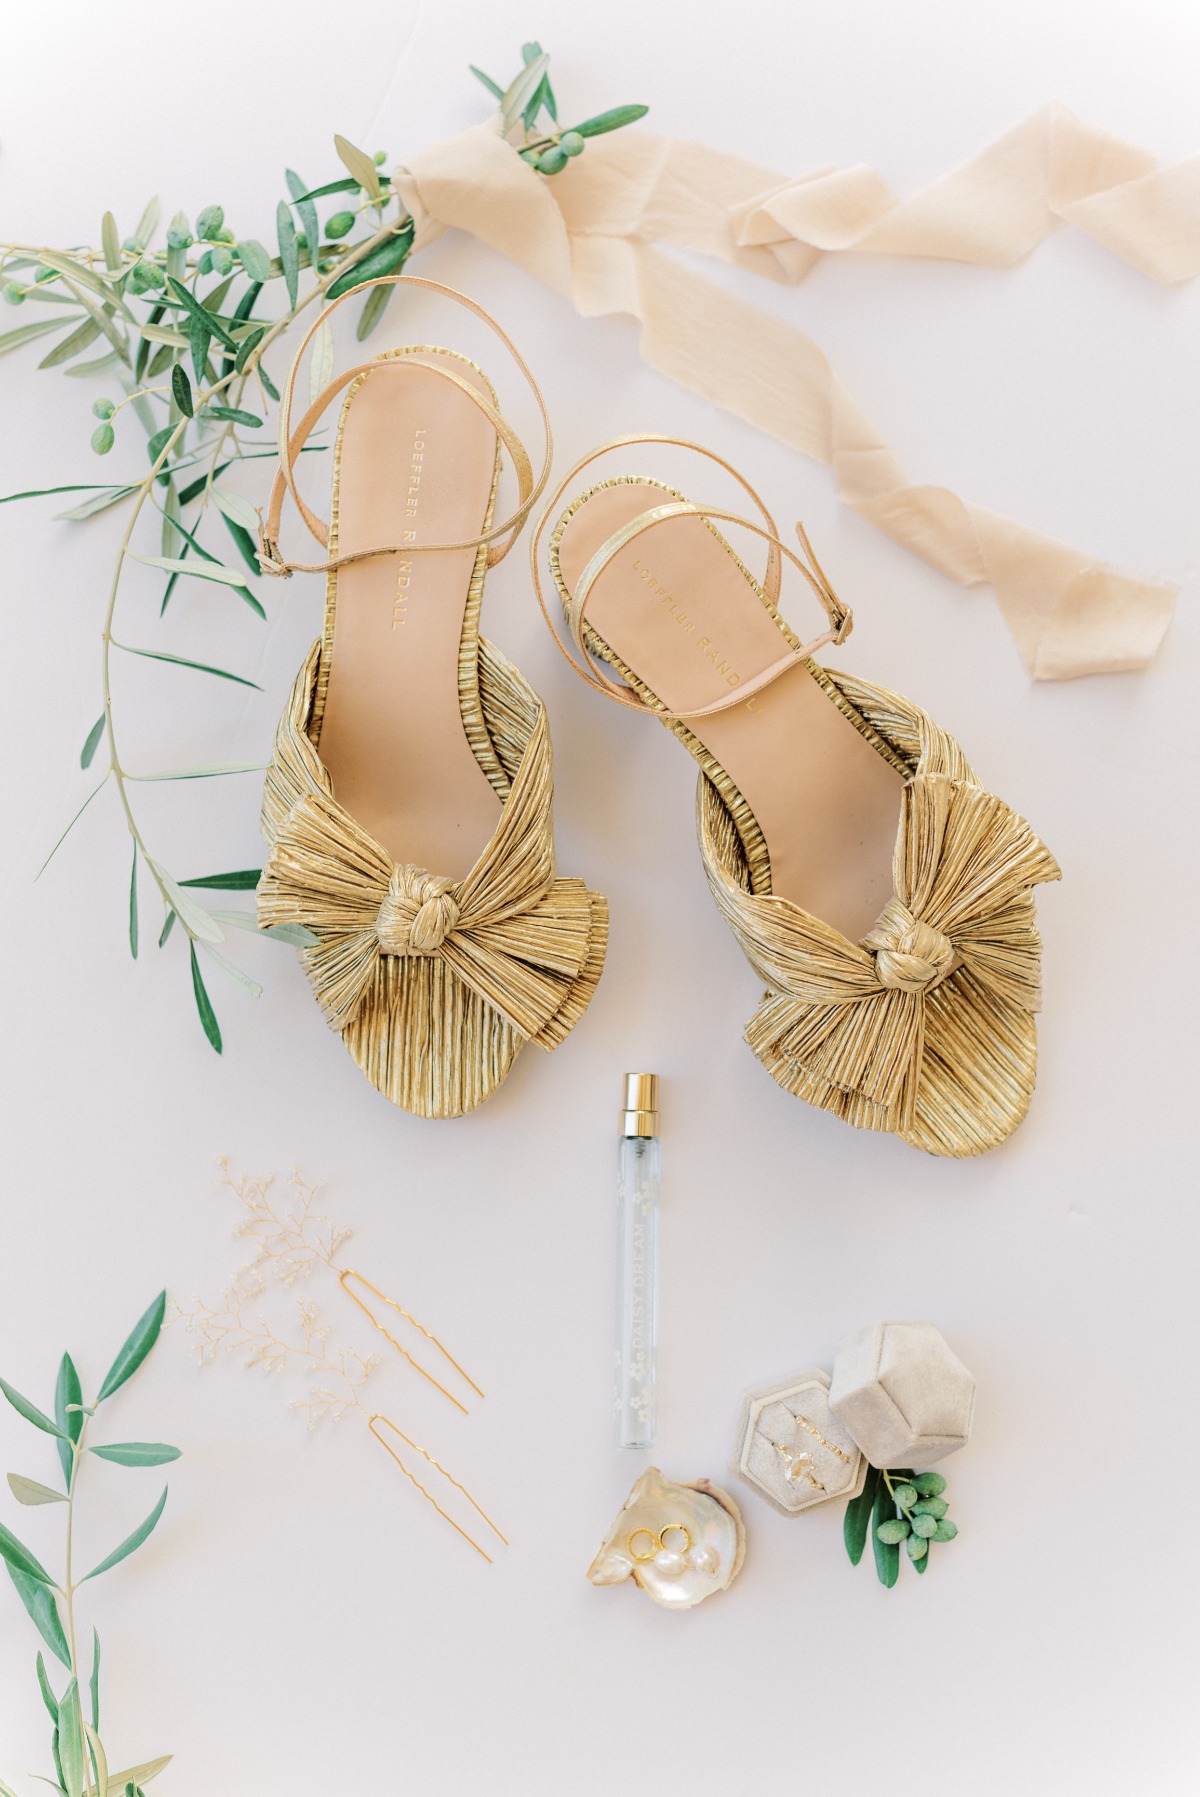 Loeffler Randall gold wedding shoes